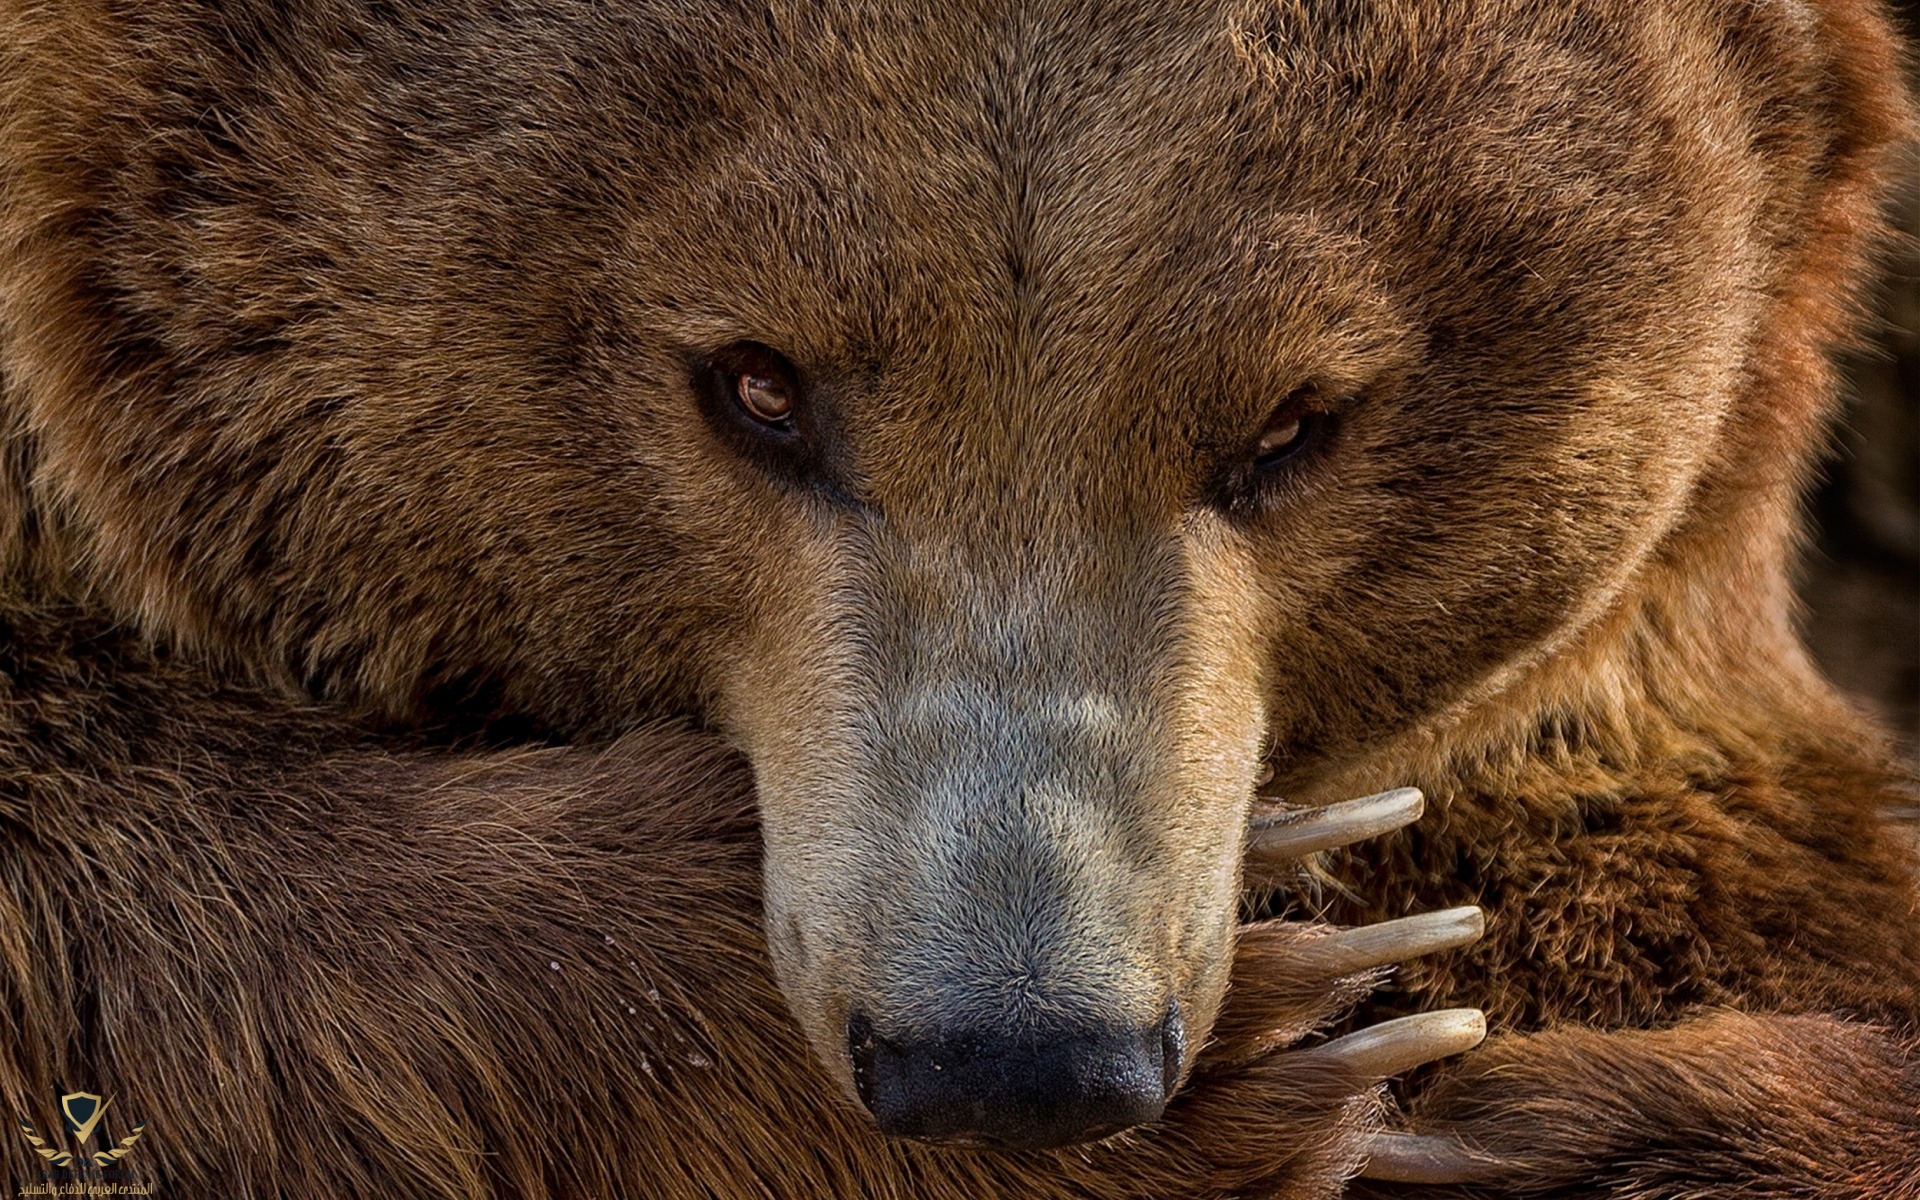 grizzly-bear-large-brown-bear-wildlife-portrait-predator.jpg